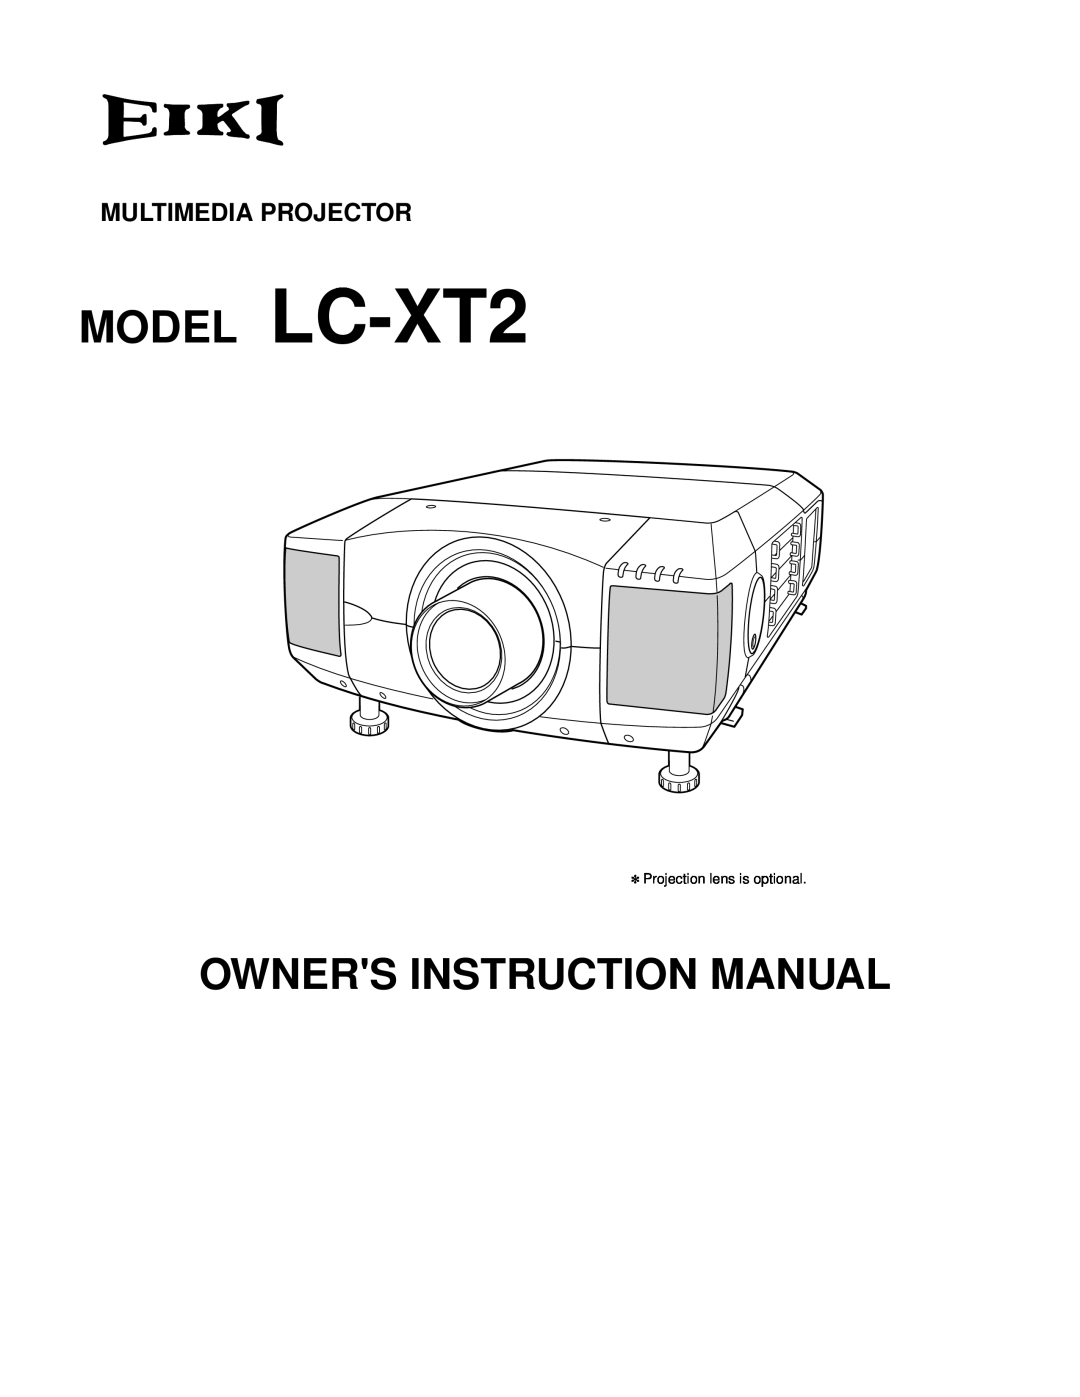 Eiki instruction manual MODEL LC-XT2 